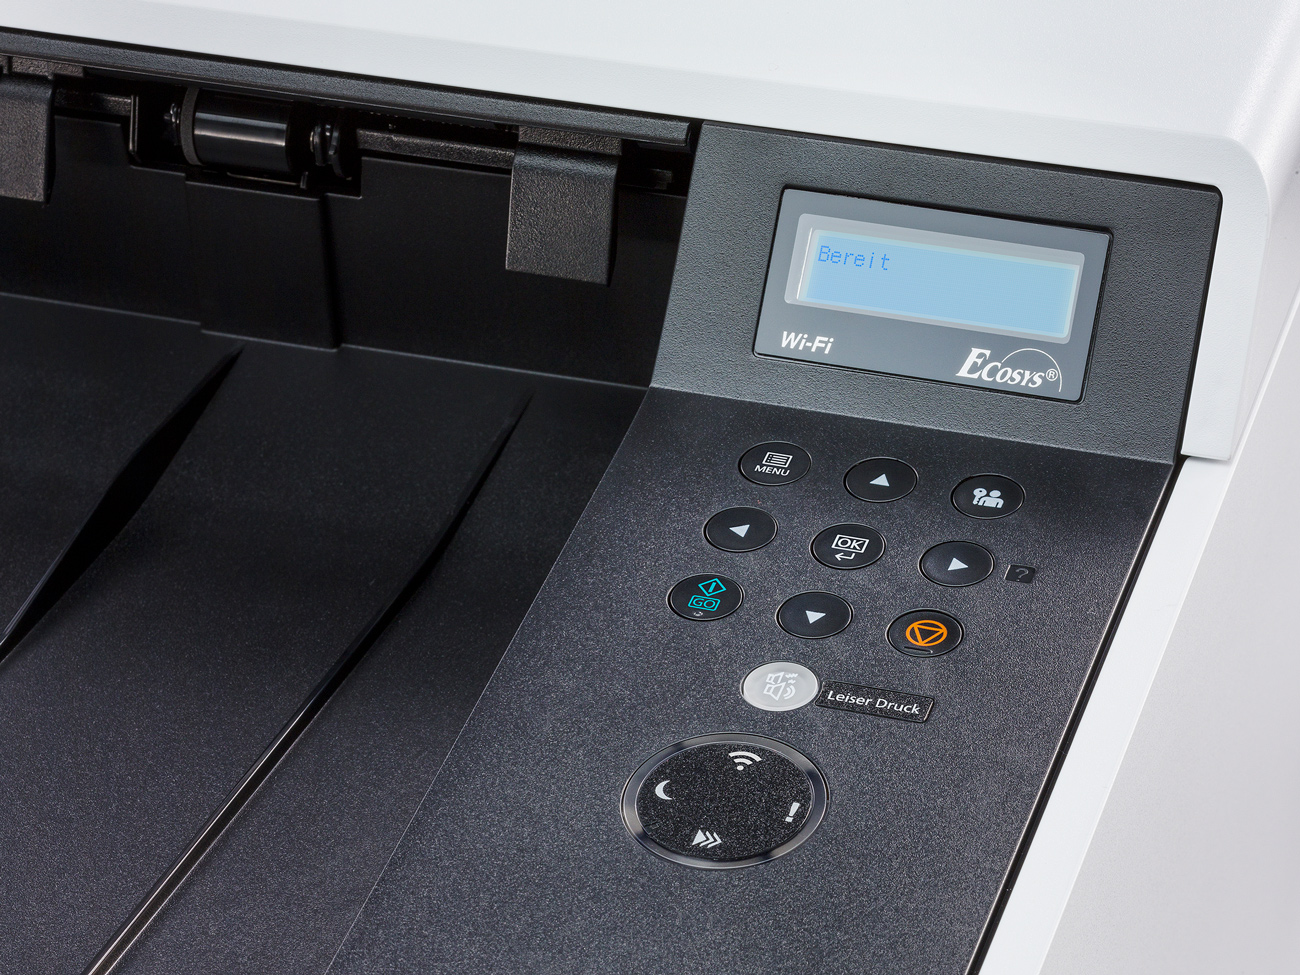 KYOCERA ECOSYS P5026cdw/Plus Laserdrucker Farbe